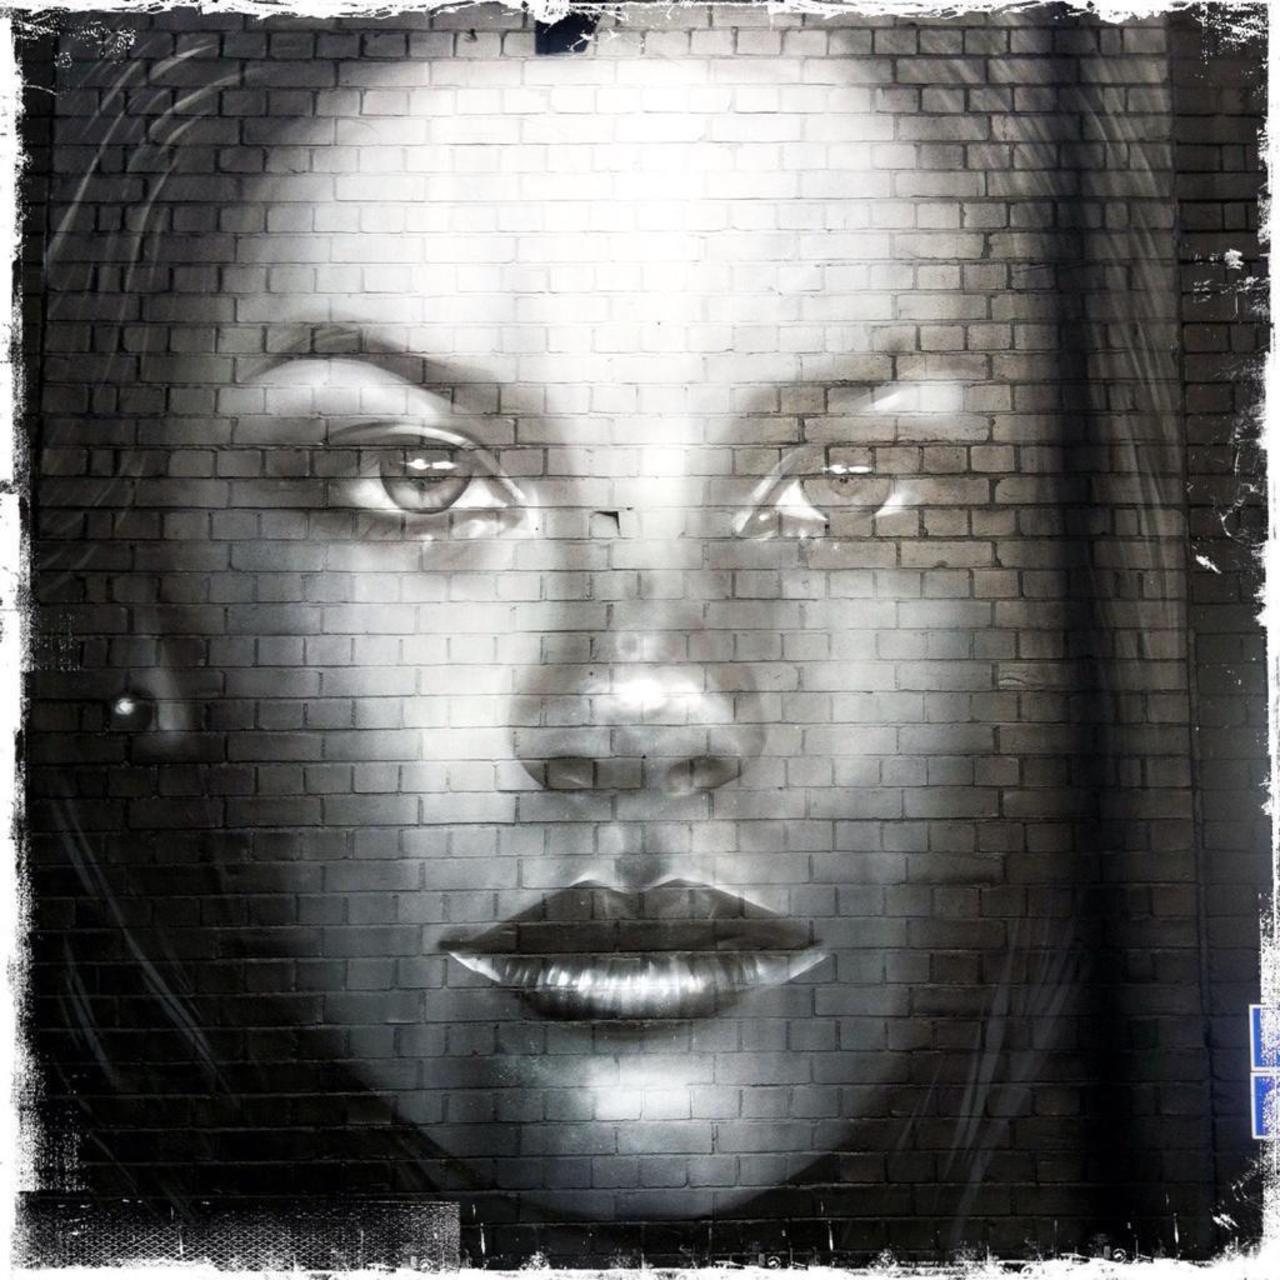 RT @richardbanfa: Beautiful work by @StarFighterA on Clare Street, Hackney #art #streetart #graffiti #switch #bedifferent #arte http://t.co/BQGRyJpcEj